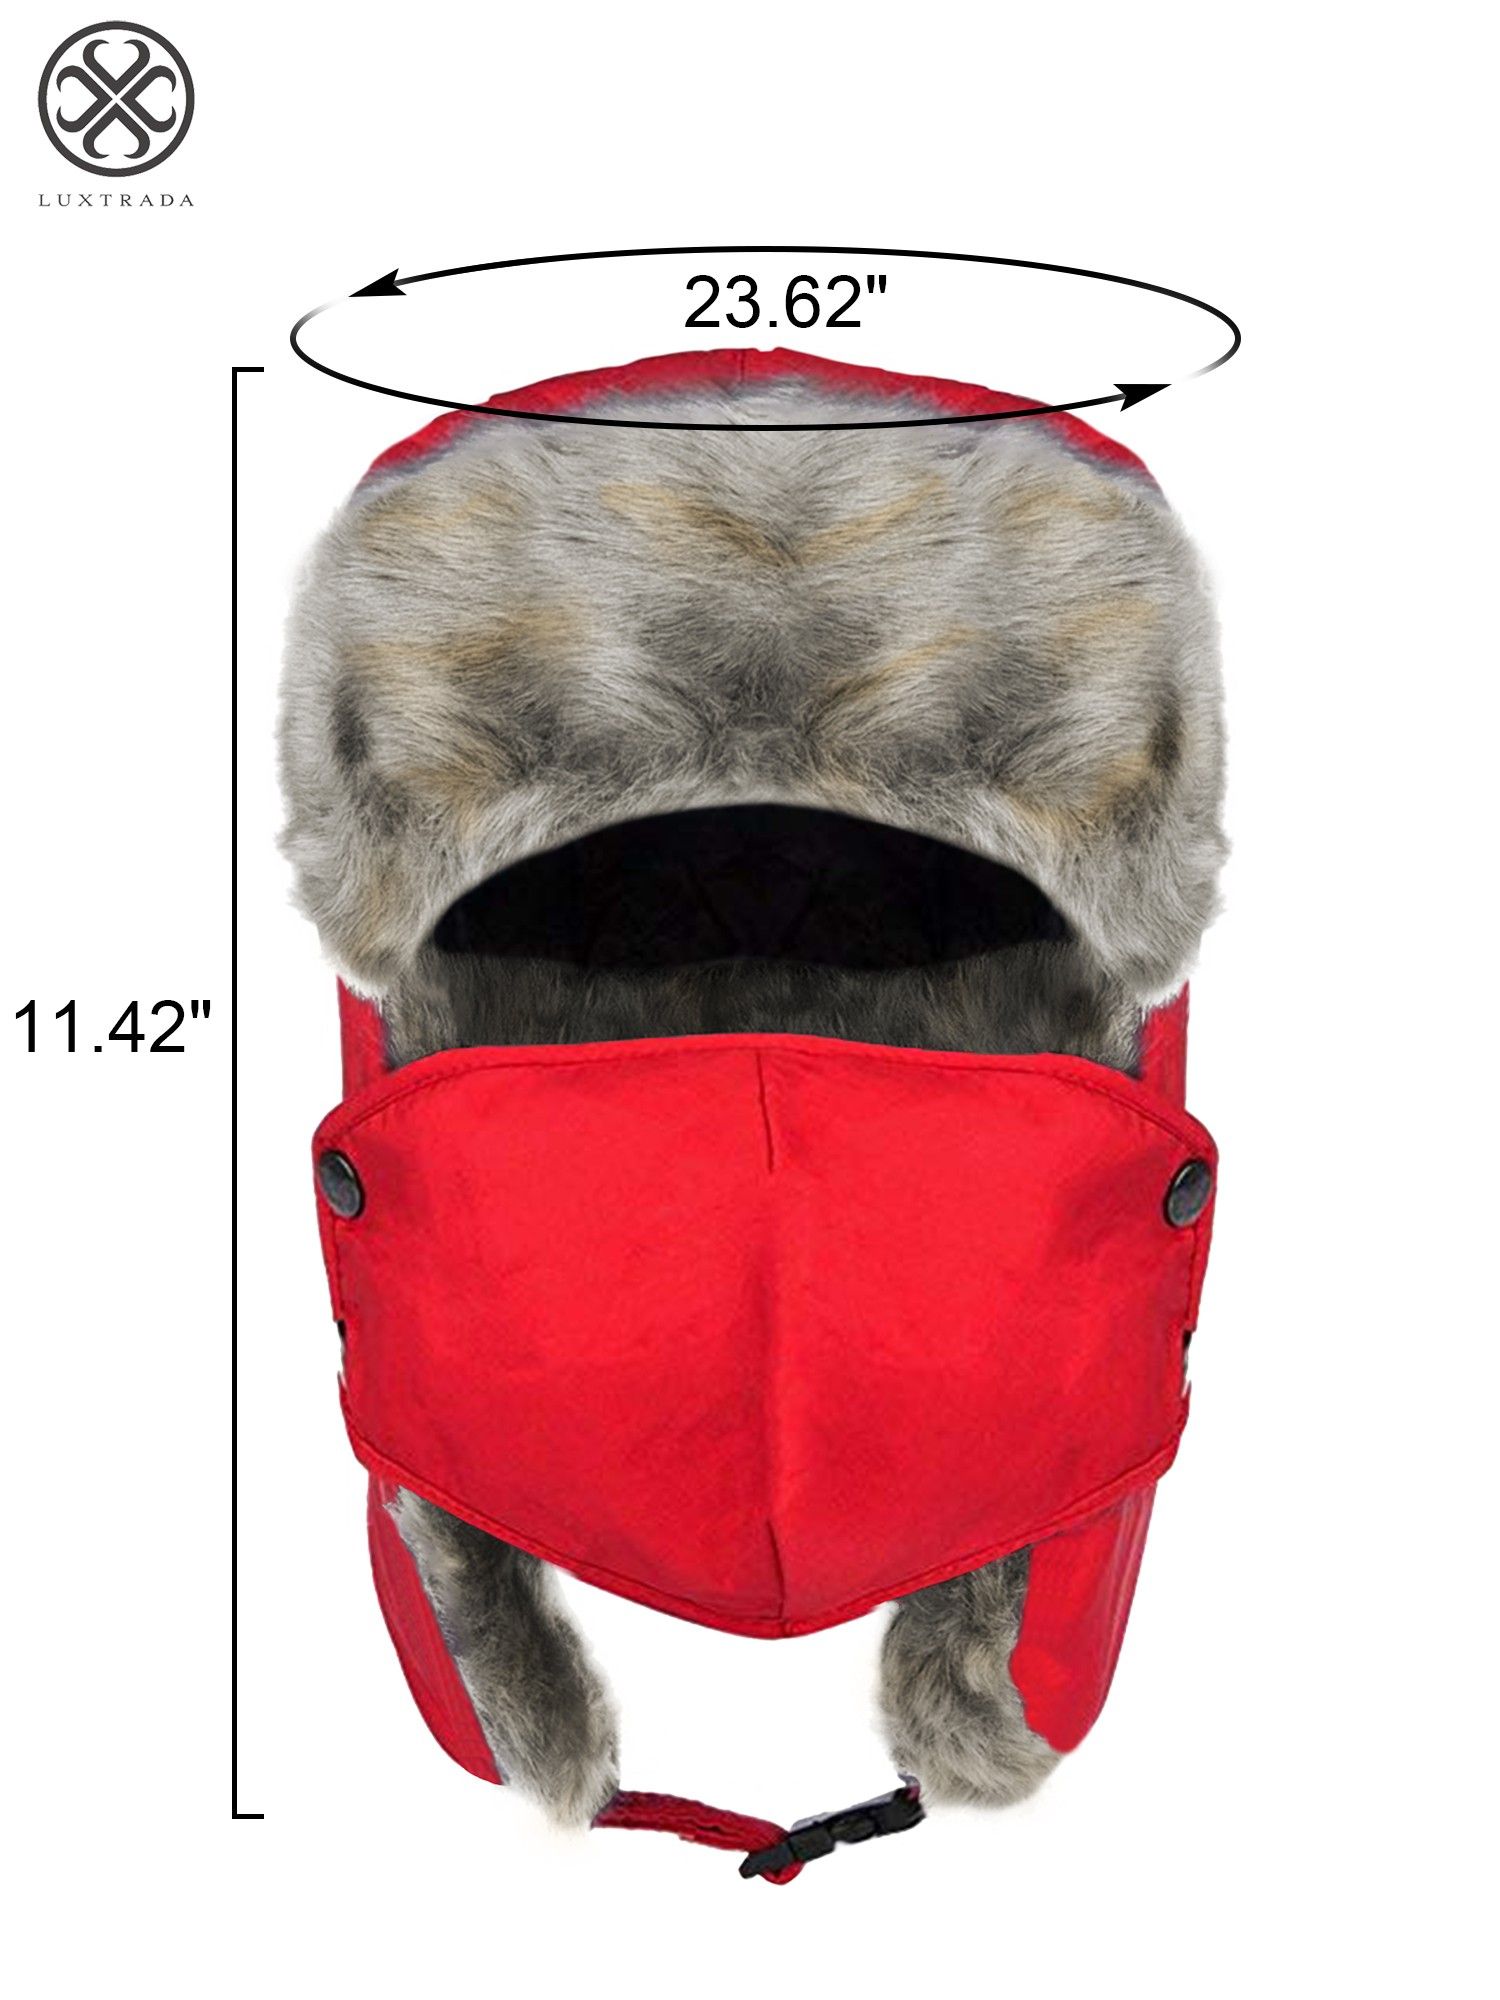 Luxtrada Winter Hats for Men and Women Trooper Hunting Hat Ushanka Hat Ski Hat with Ear Flaps Windproof Waterproof Warm Hat (Black) - image 3 of 10